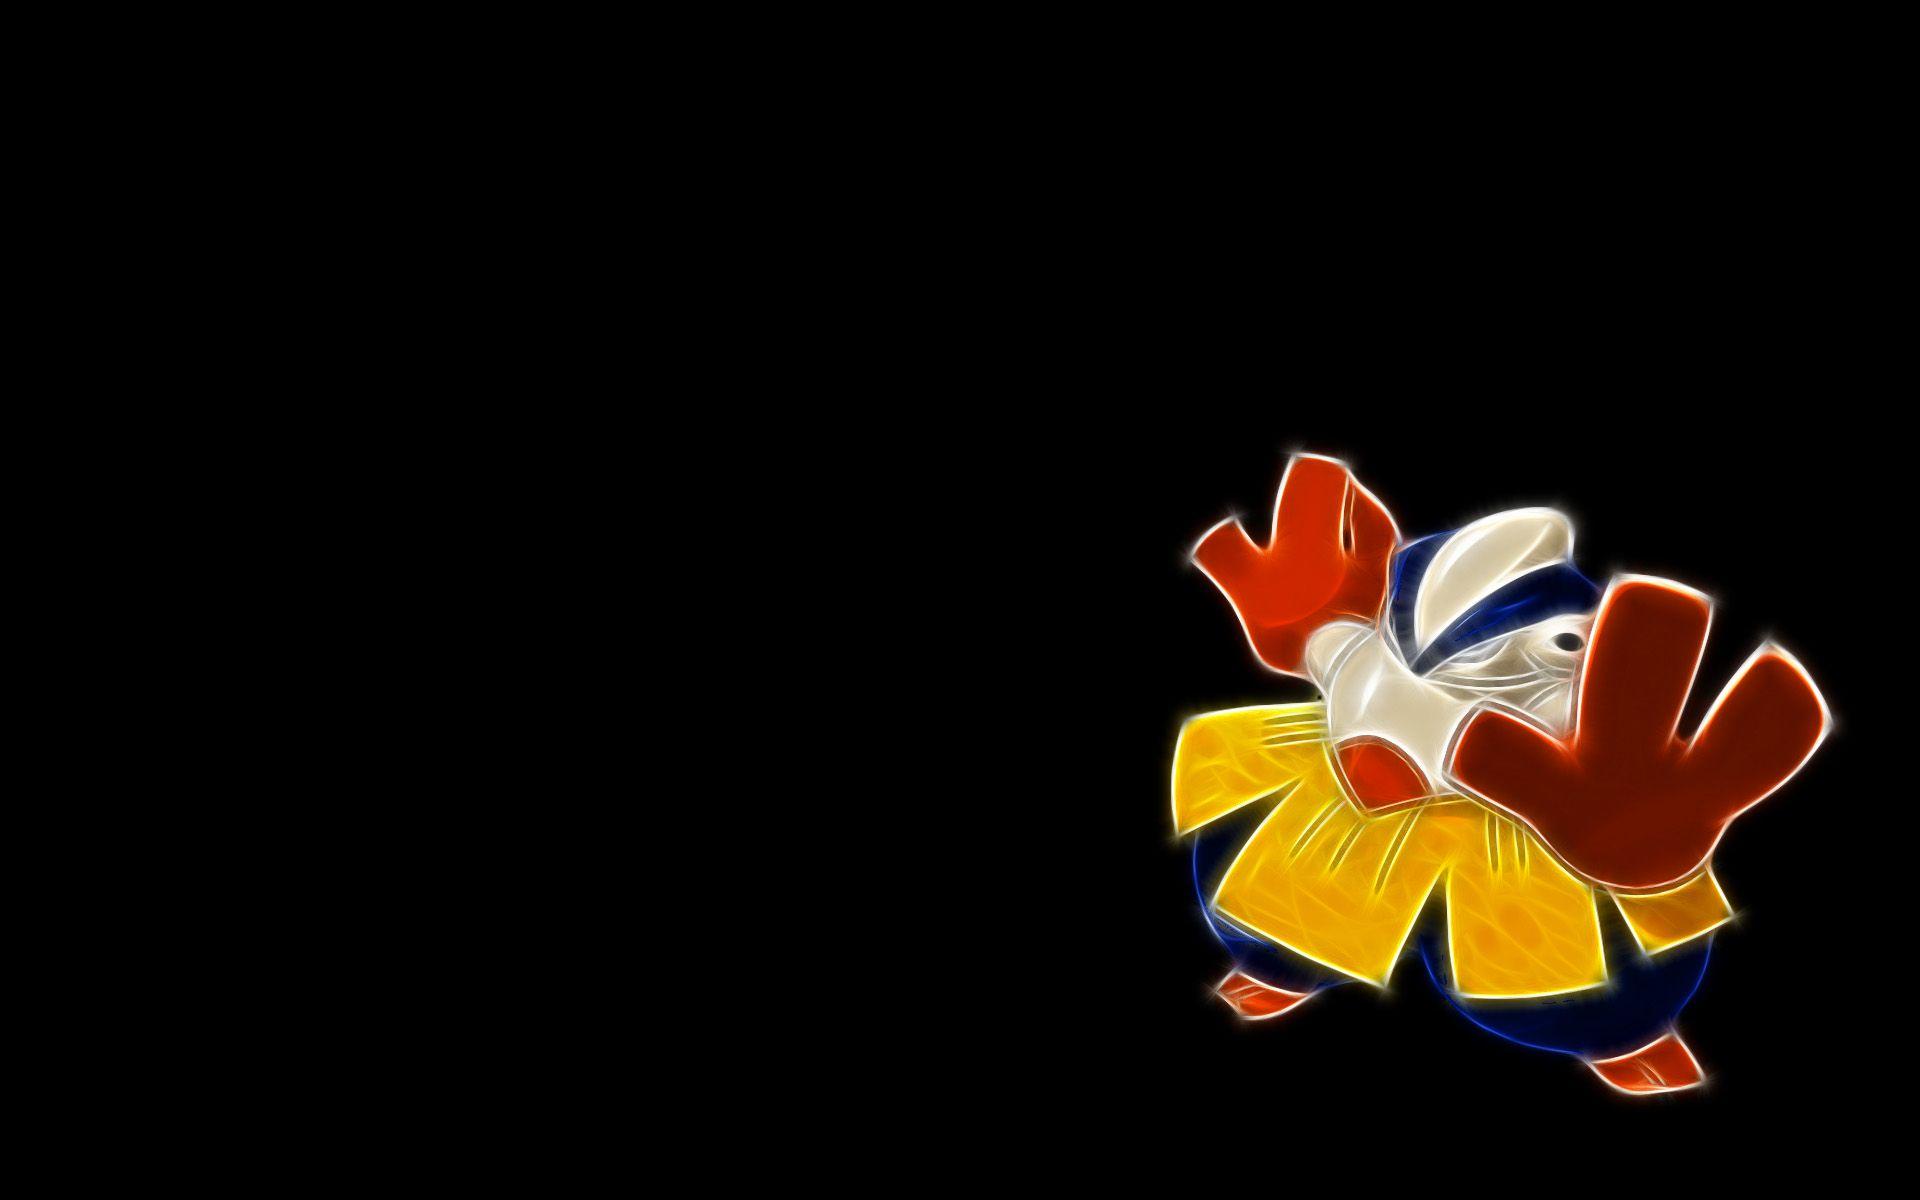 Hariyama (Pokémon) HD Wallpaper and Background Image